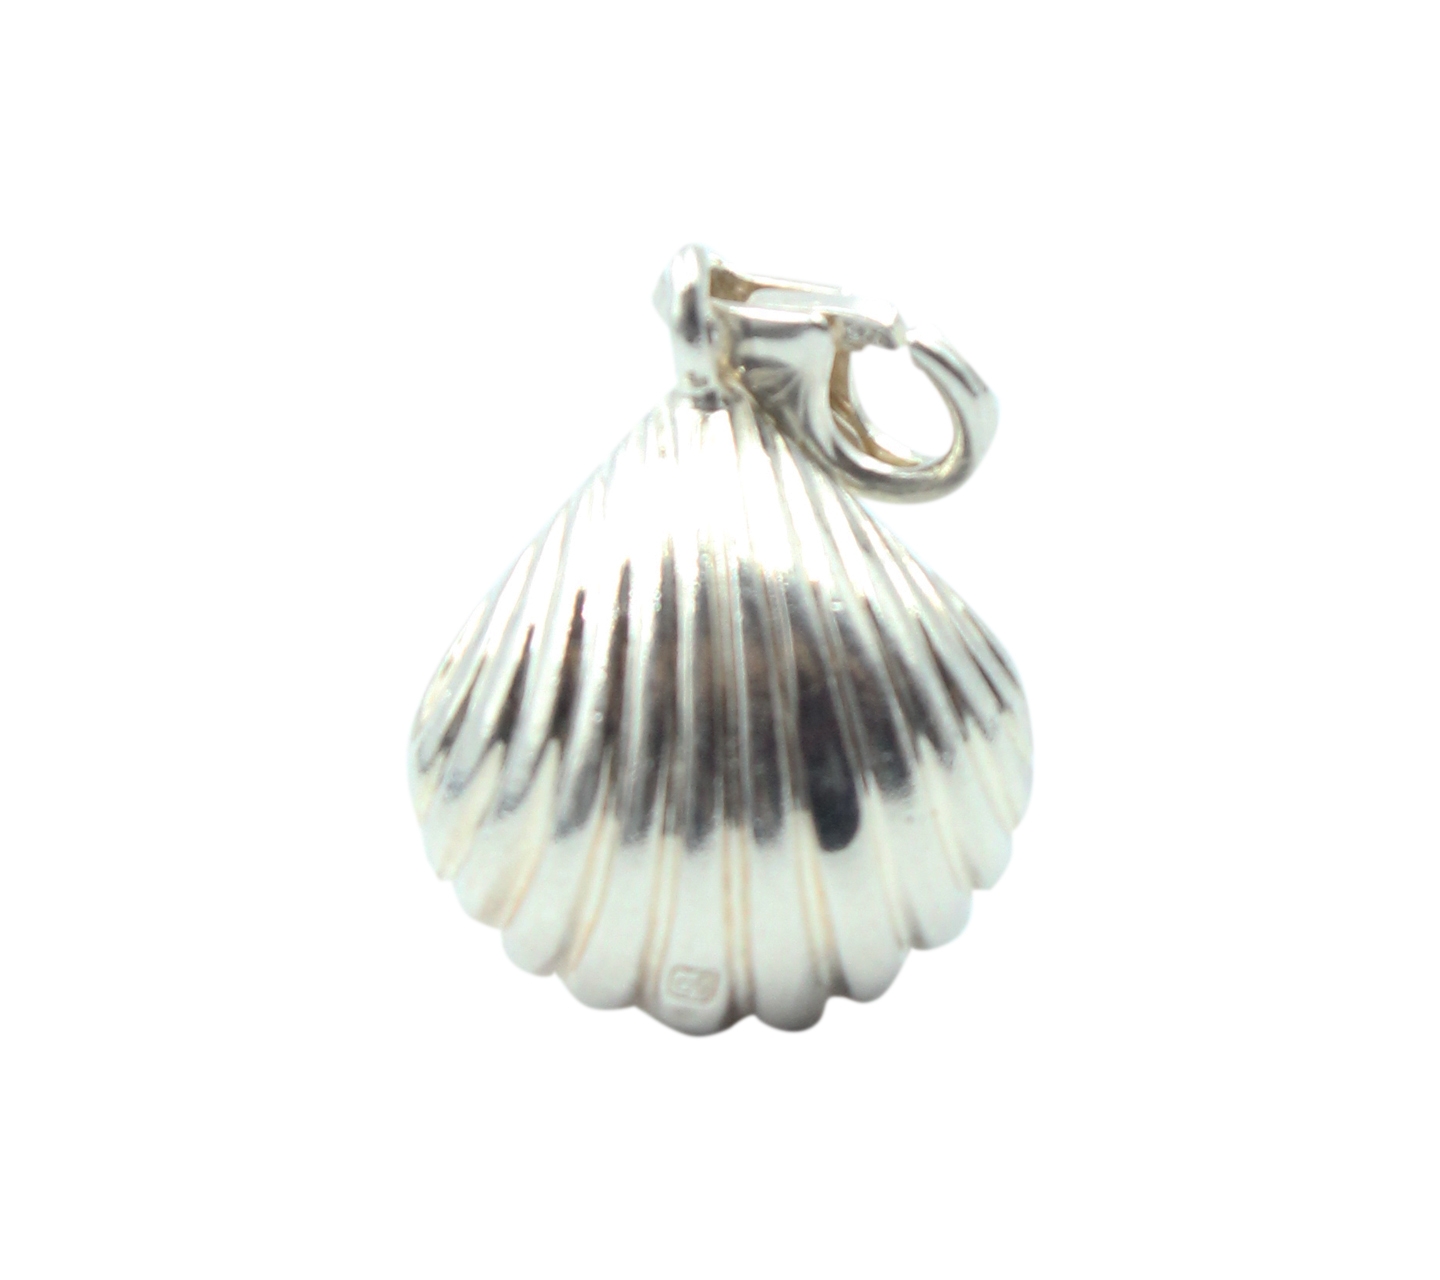 Thomas Sabo Silver Seashell Charm Jewelry